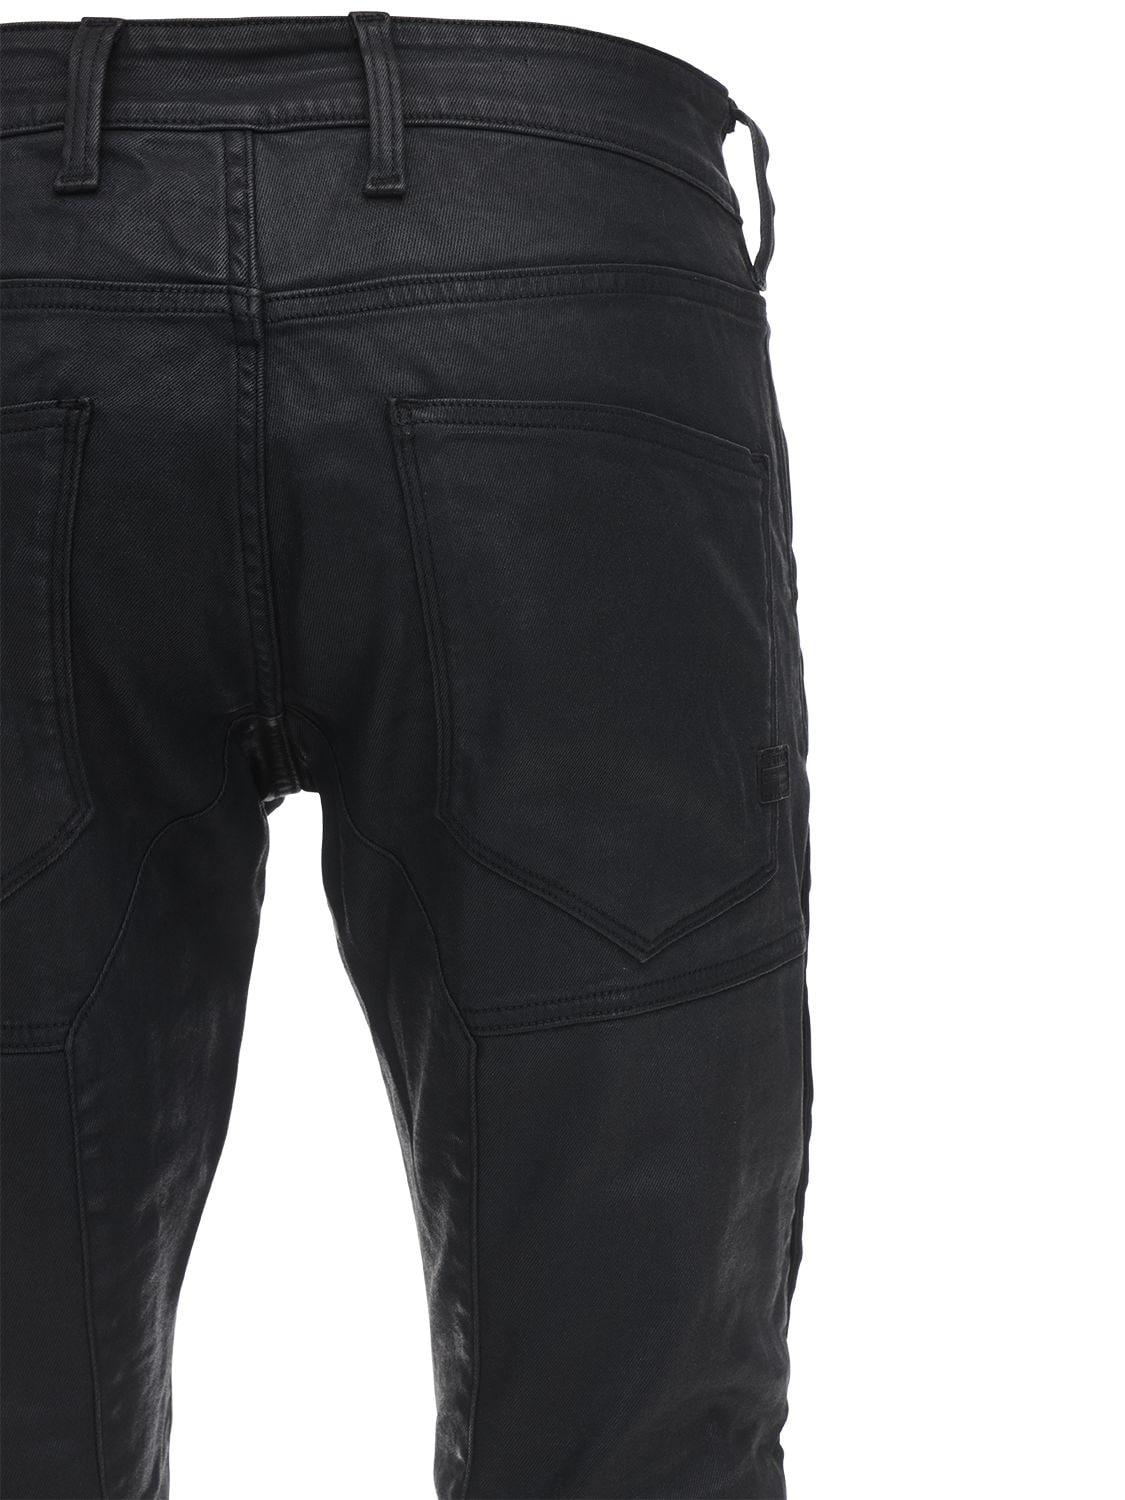 G-Star RAW Rackam 3d Skinny Waxed Denim Jeans in Black for Men - Lyst